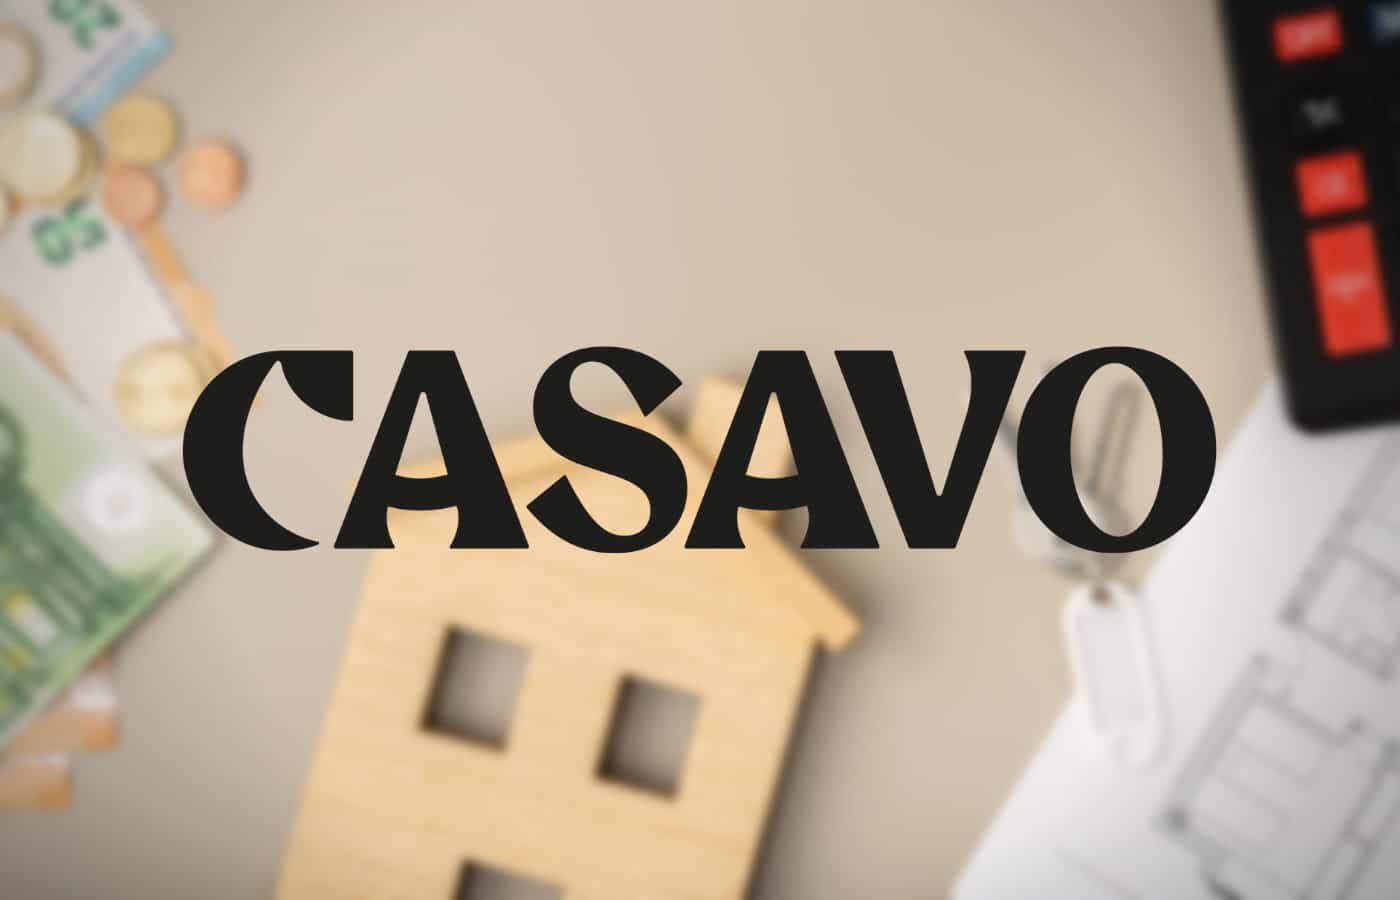 Casavo